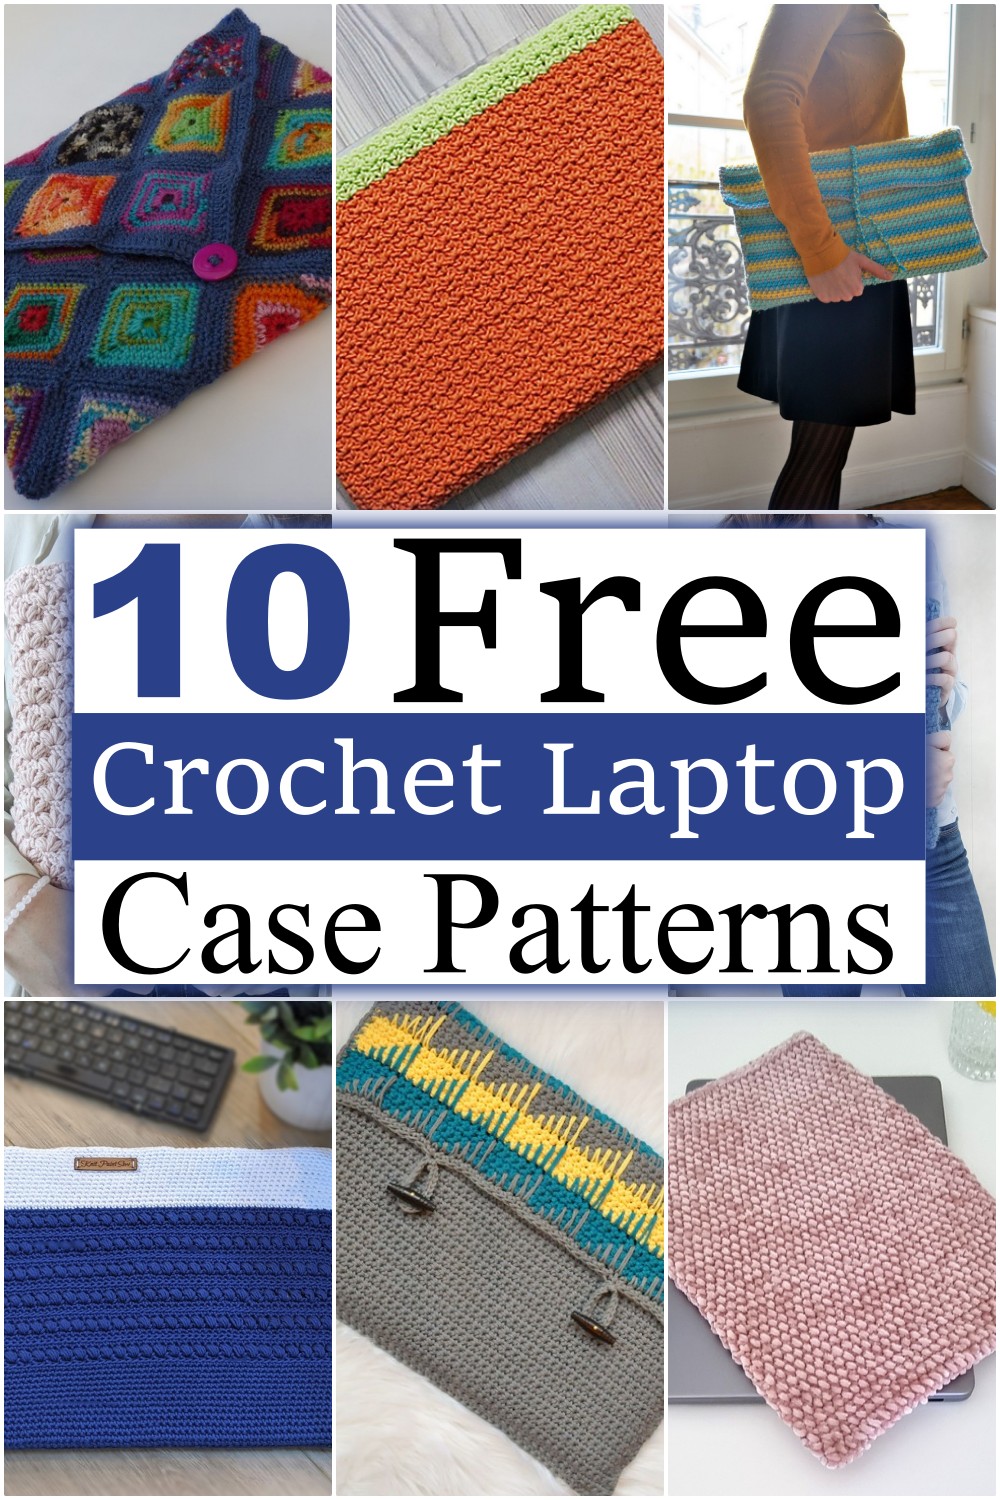 Crochet Laptop Case Patterns